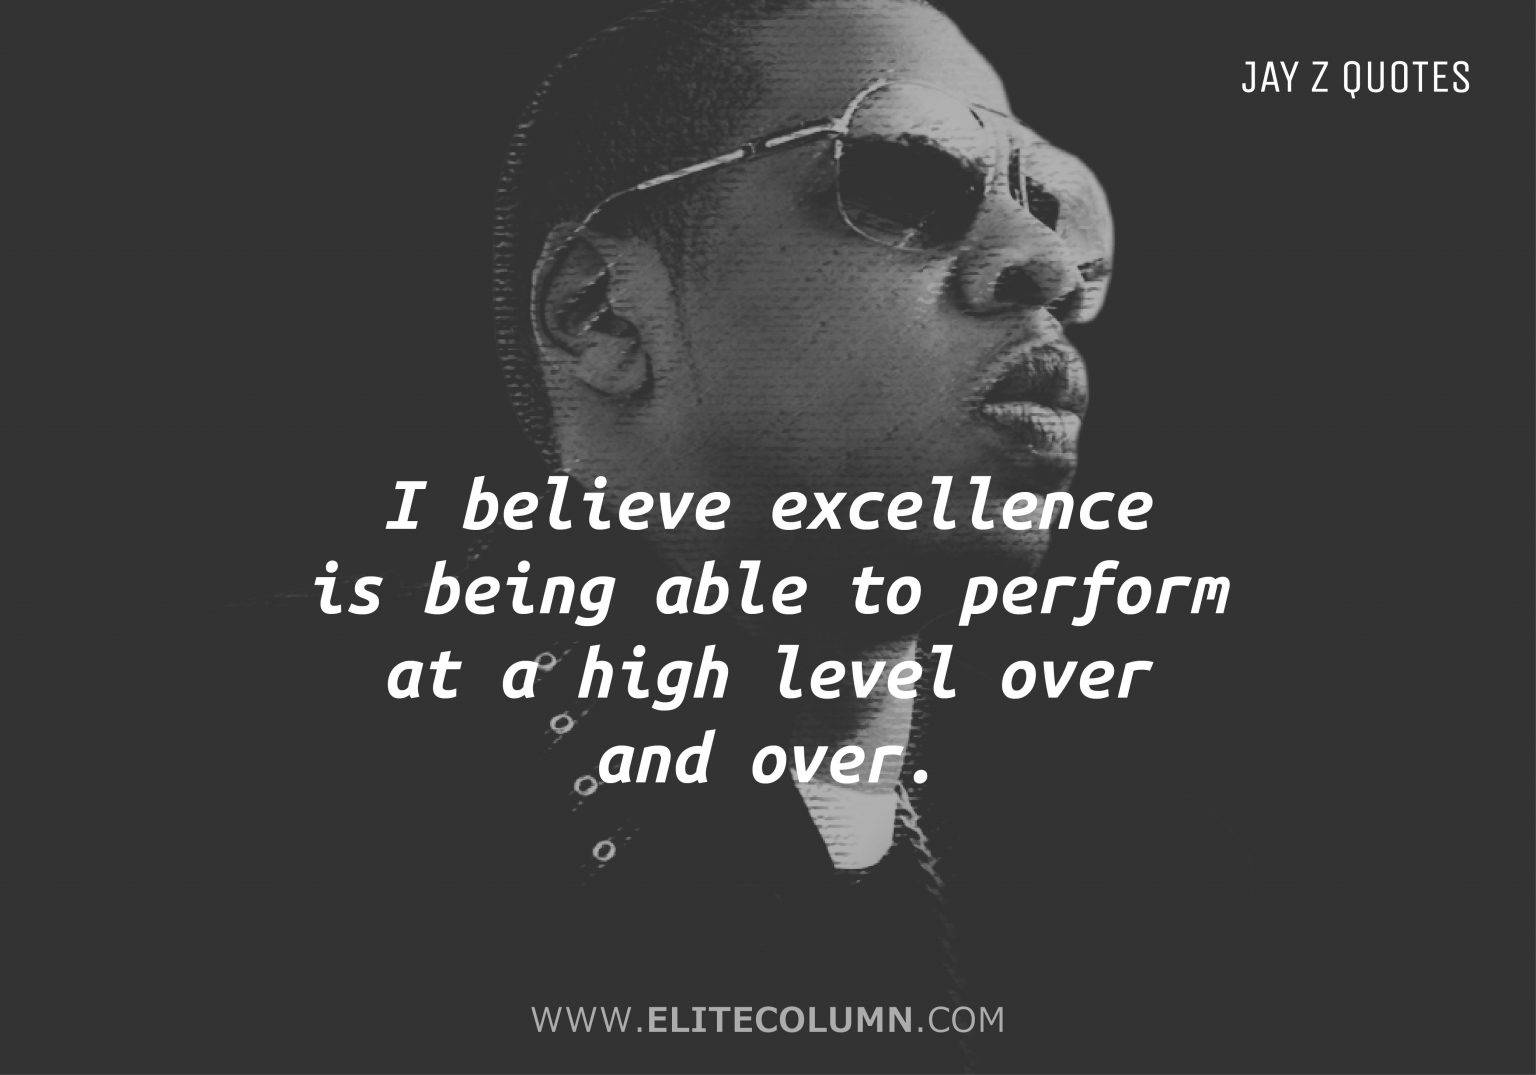 40 Jay Z Quotes That Will Motivate You (2021) | EliteColumn